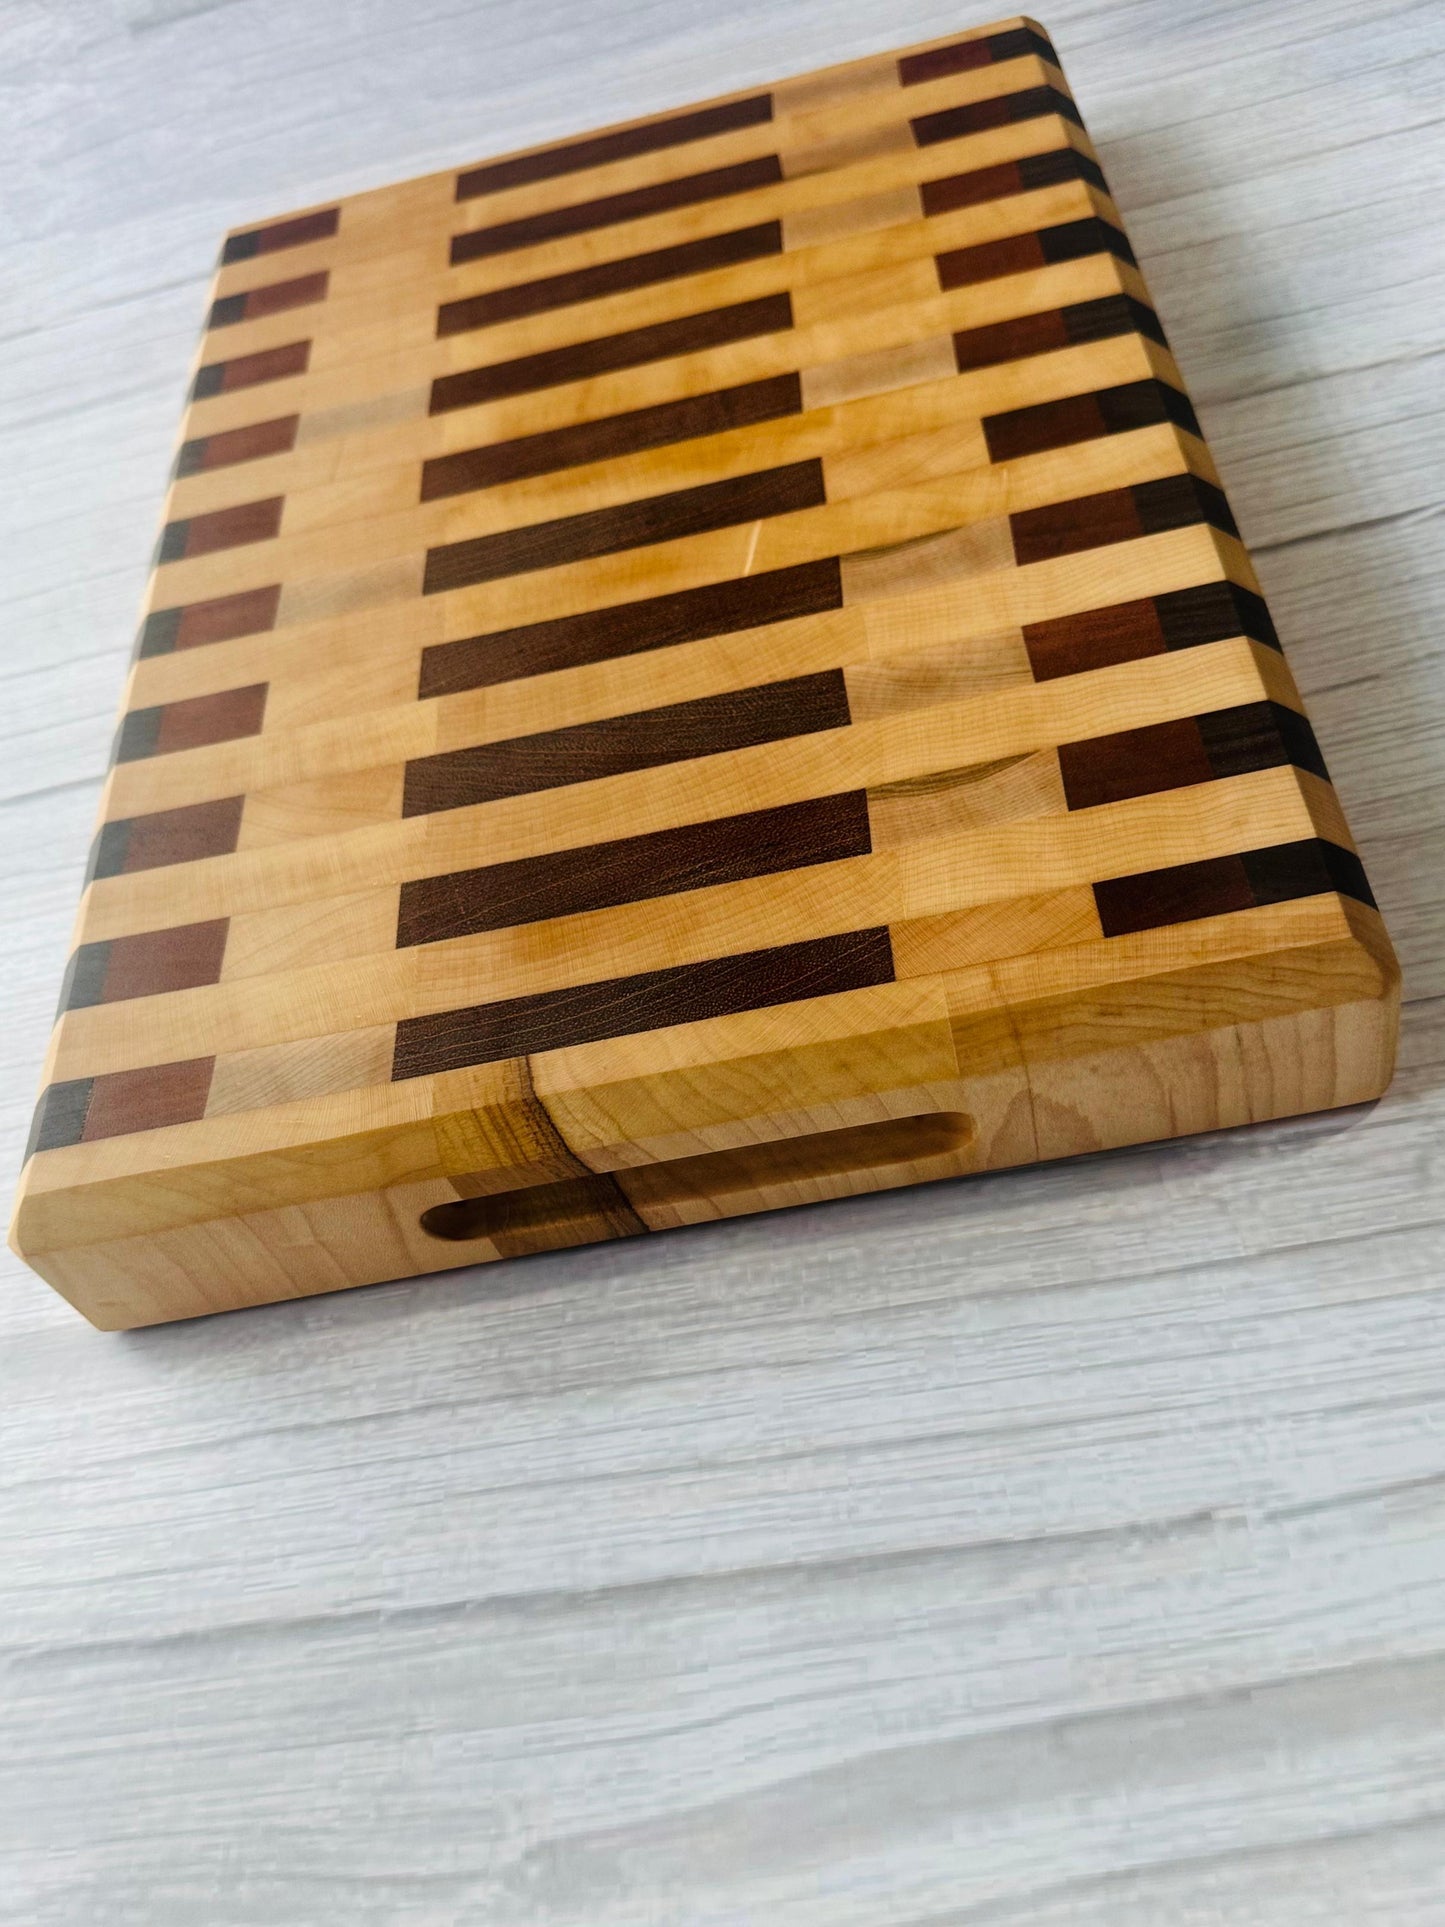 Two Sides Endgrain Cutting Board, Reversible. 4 Hardwoods: Walnut, Maple, Jatoba(Brazilian Cherry) and Mahogany.